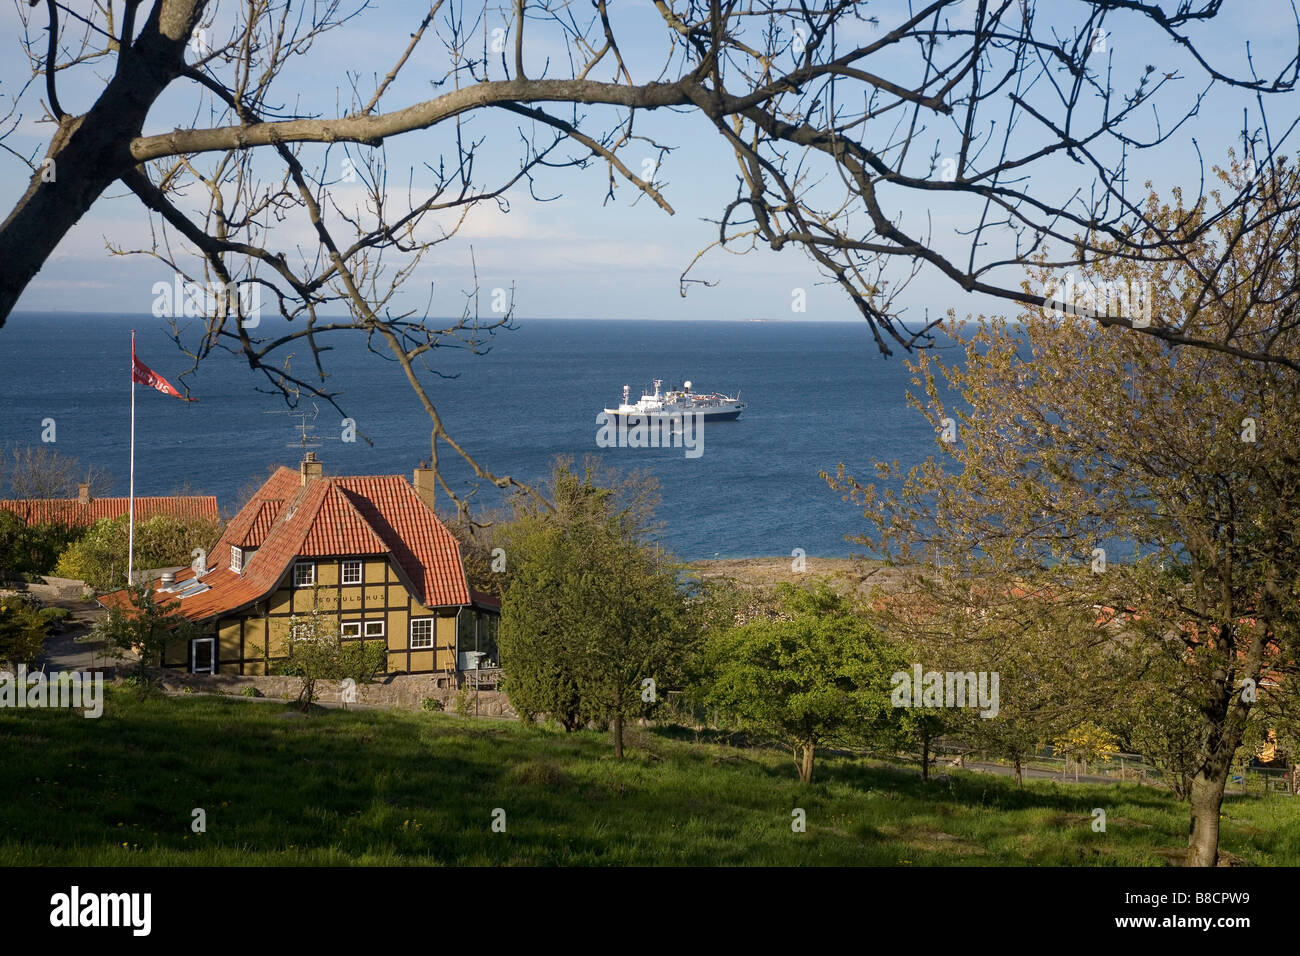 Bornholm island on the Baltic Sea, Denmark Stock Photo